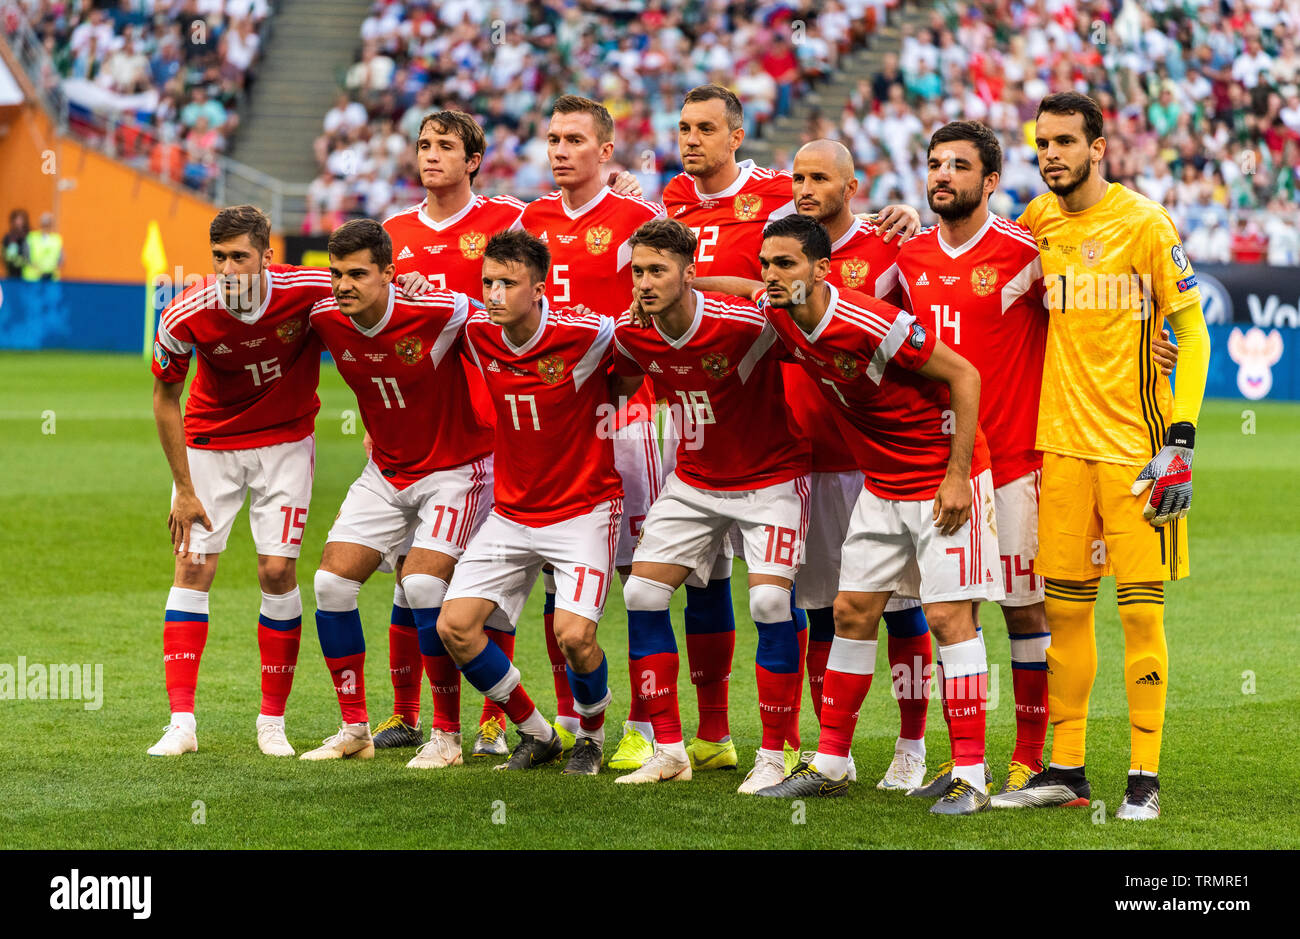 Saransk, Russia – June 8, 2019. Team photo of Russia national football team ahead of UEFA Euro 2020 qualification match Russia vs San Marino in Sarans Stock Photo